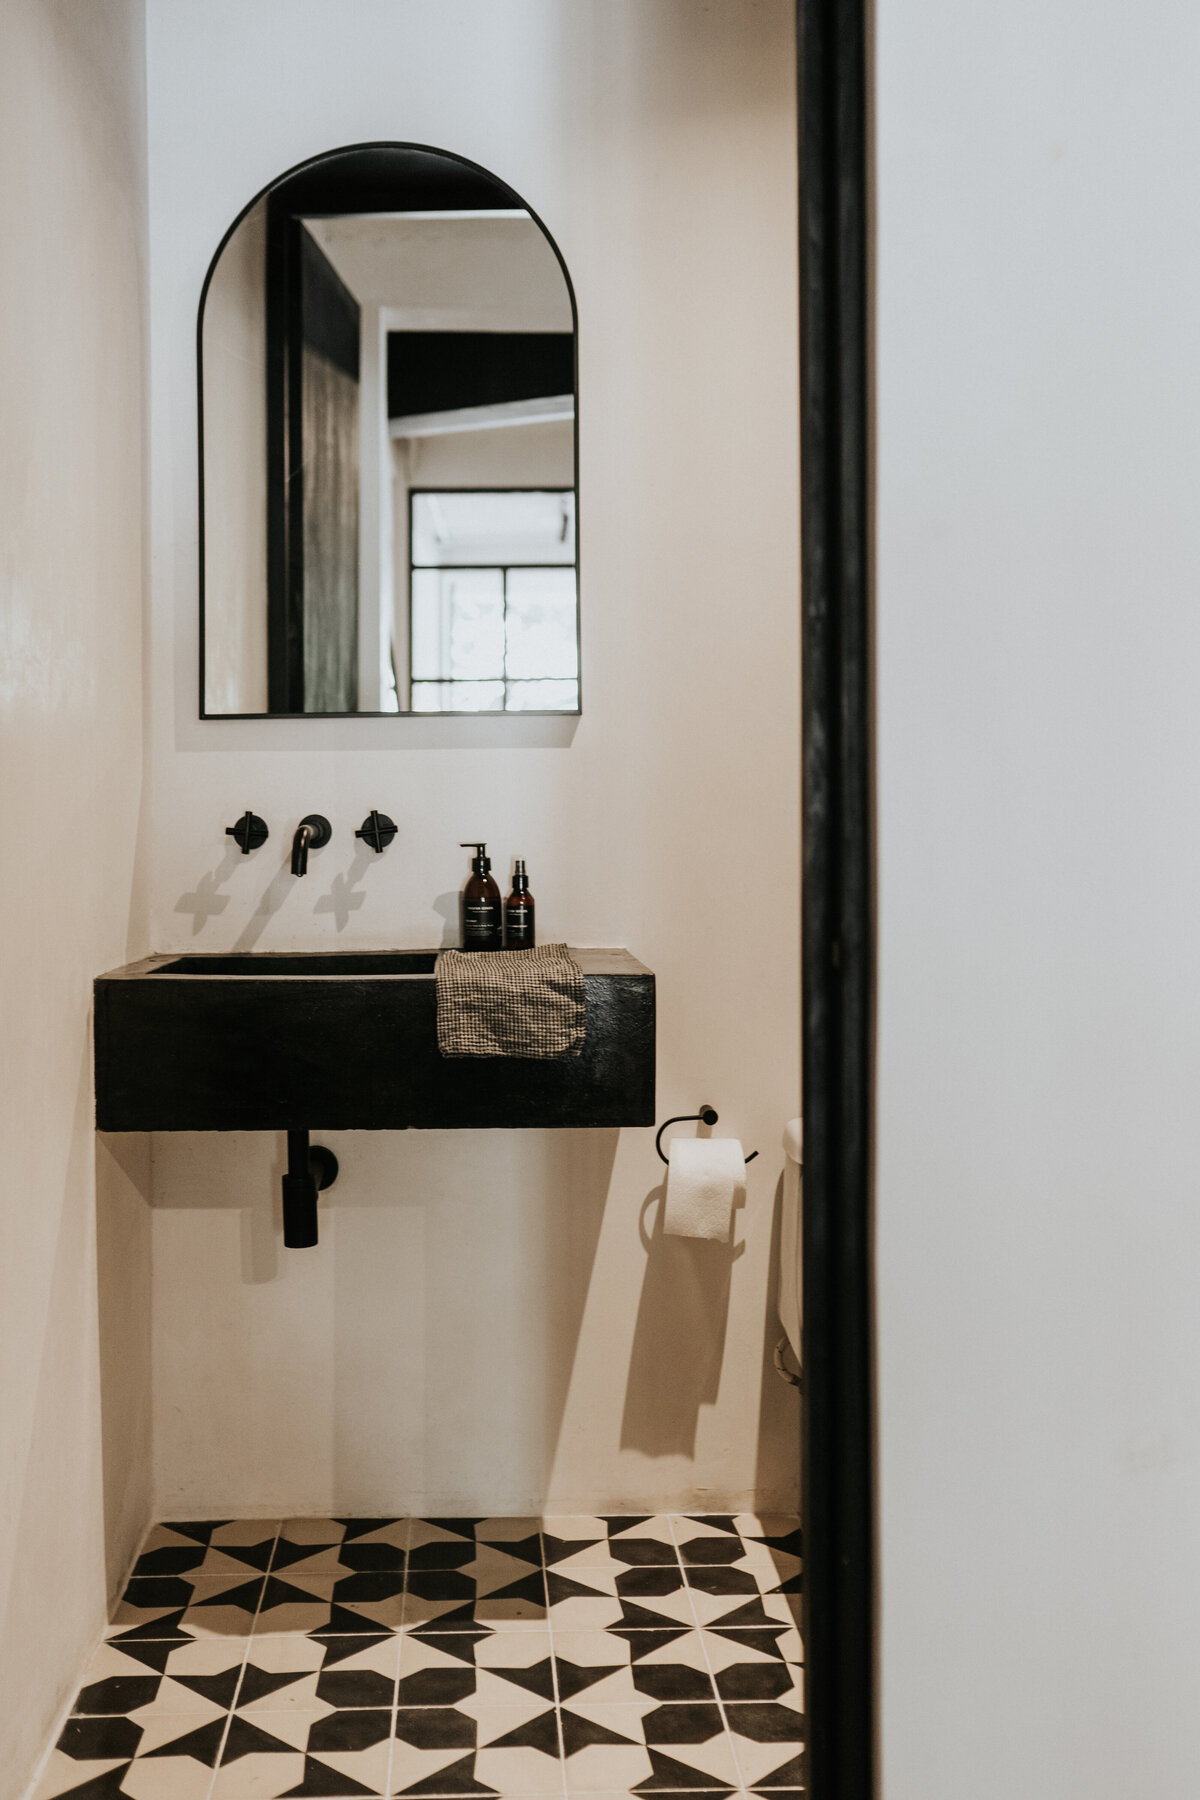 washroom-sink-mirror-tiled-floor